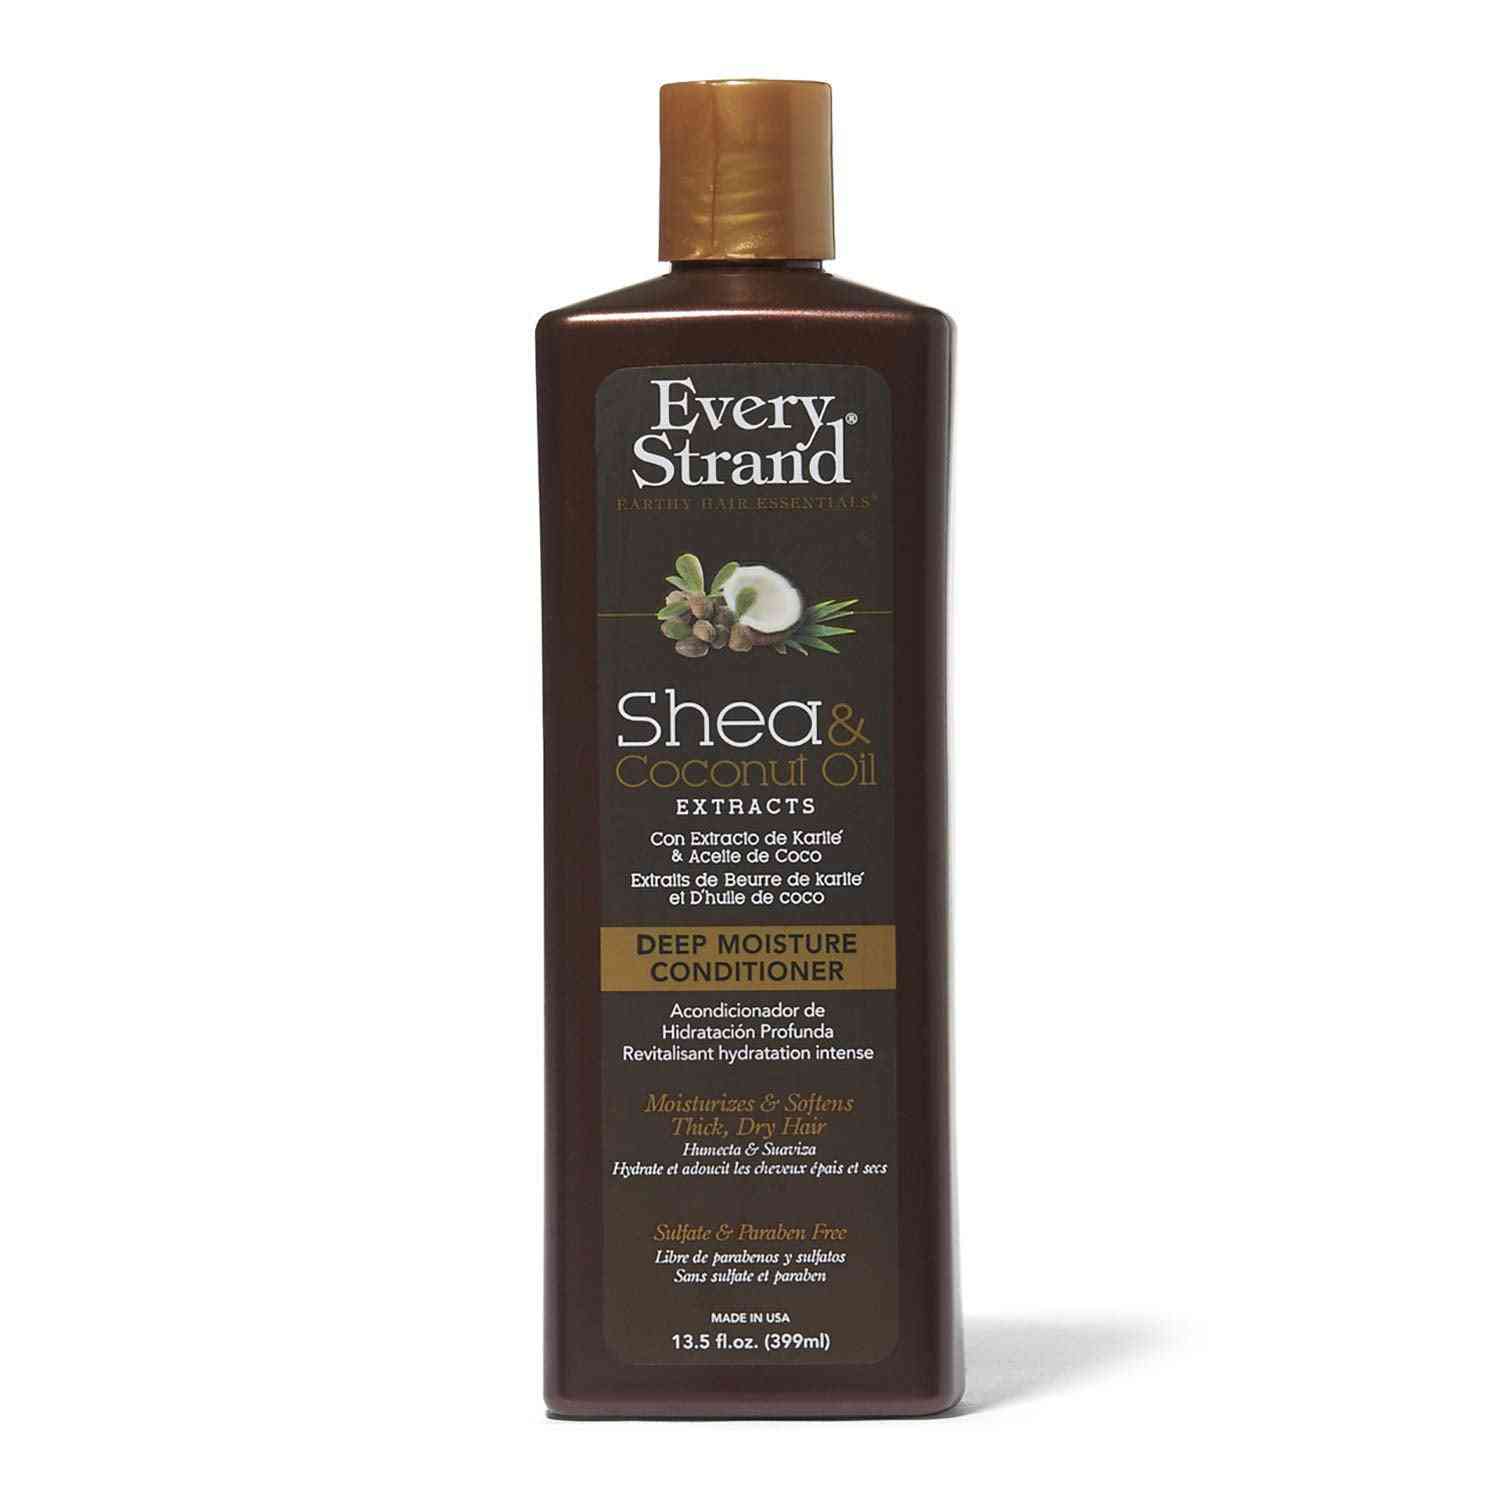 Every strand shea  coconut oil deep moisture conditioner 13,5 oz